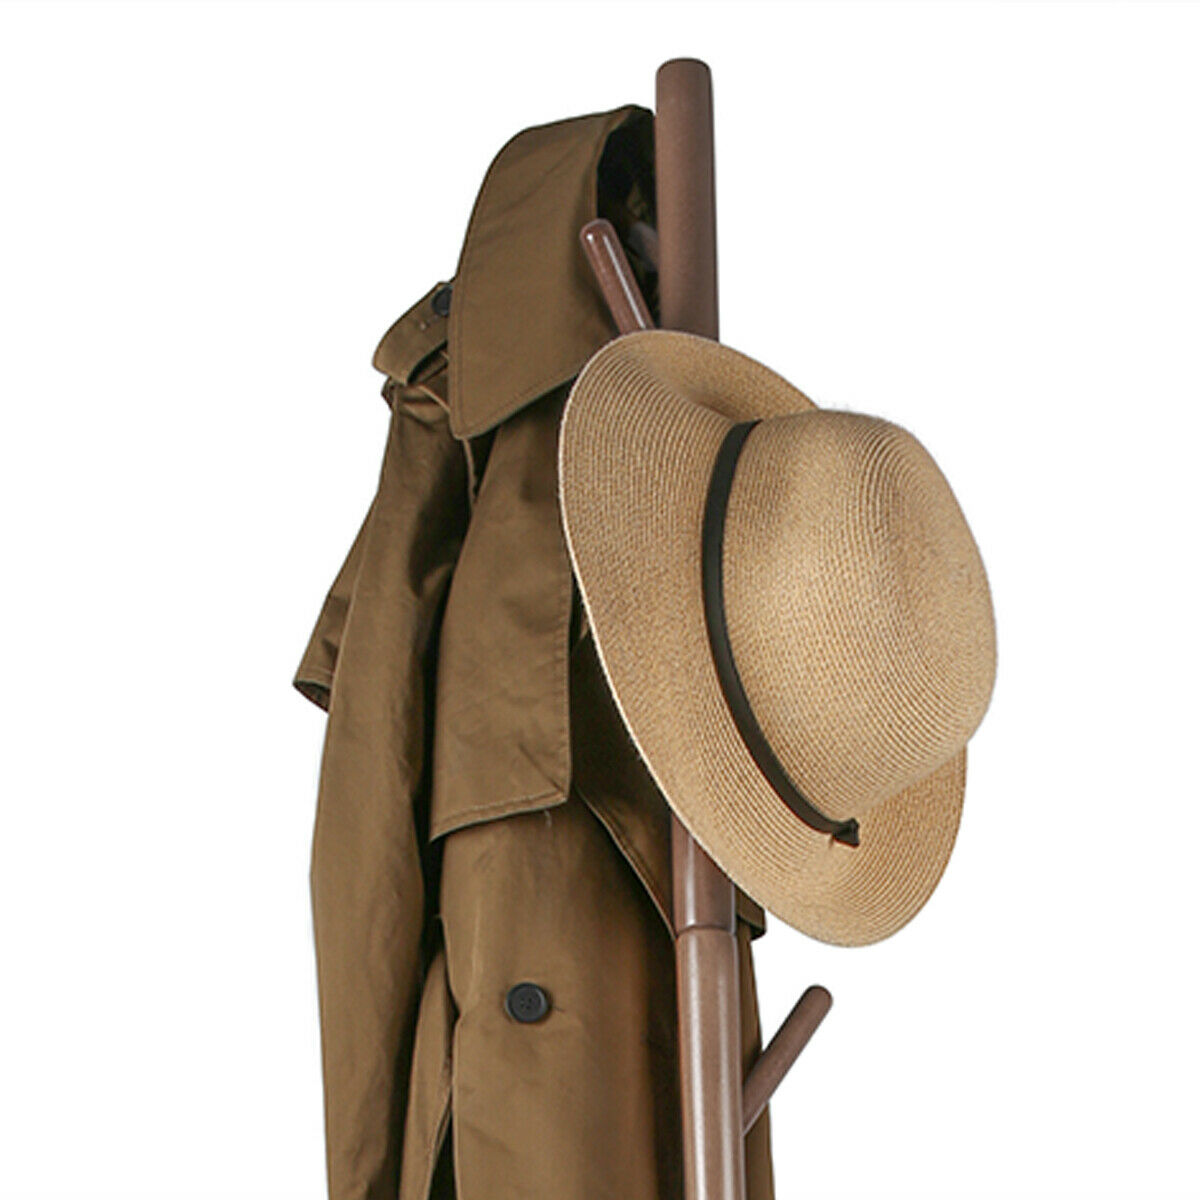 Wooden Coat Stand Rack Clothes Hanger Hat Tree Jacket Bag Umbrella 8Hook Storage